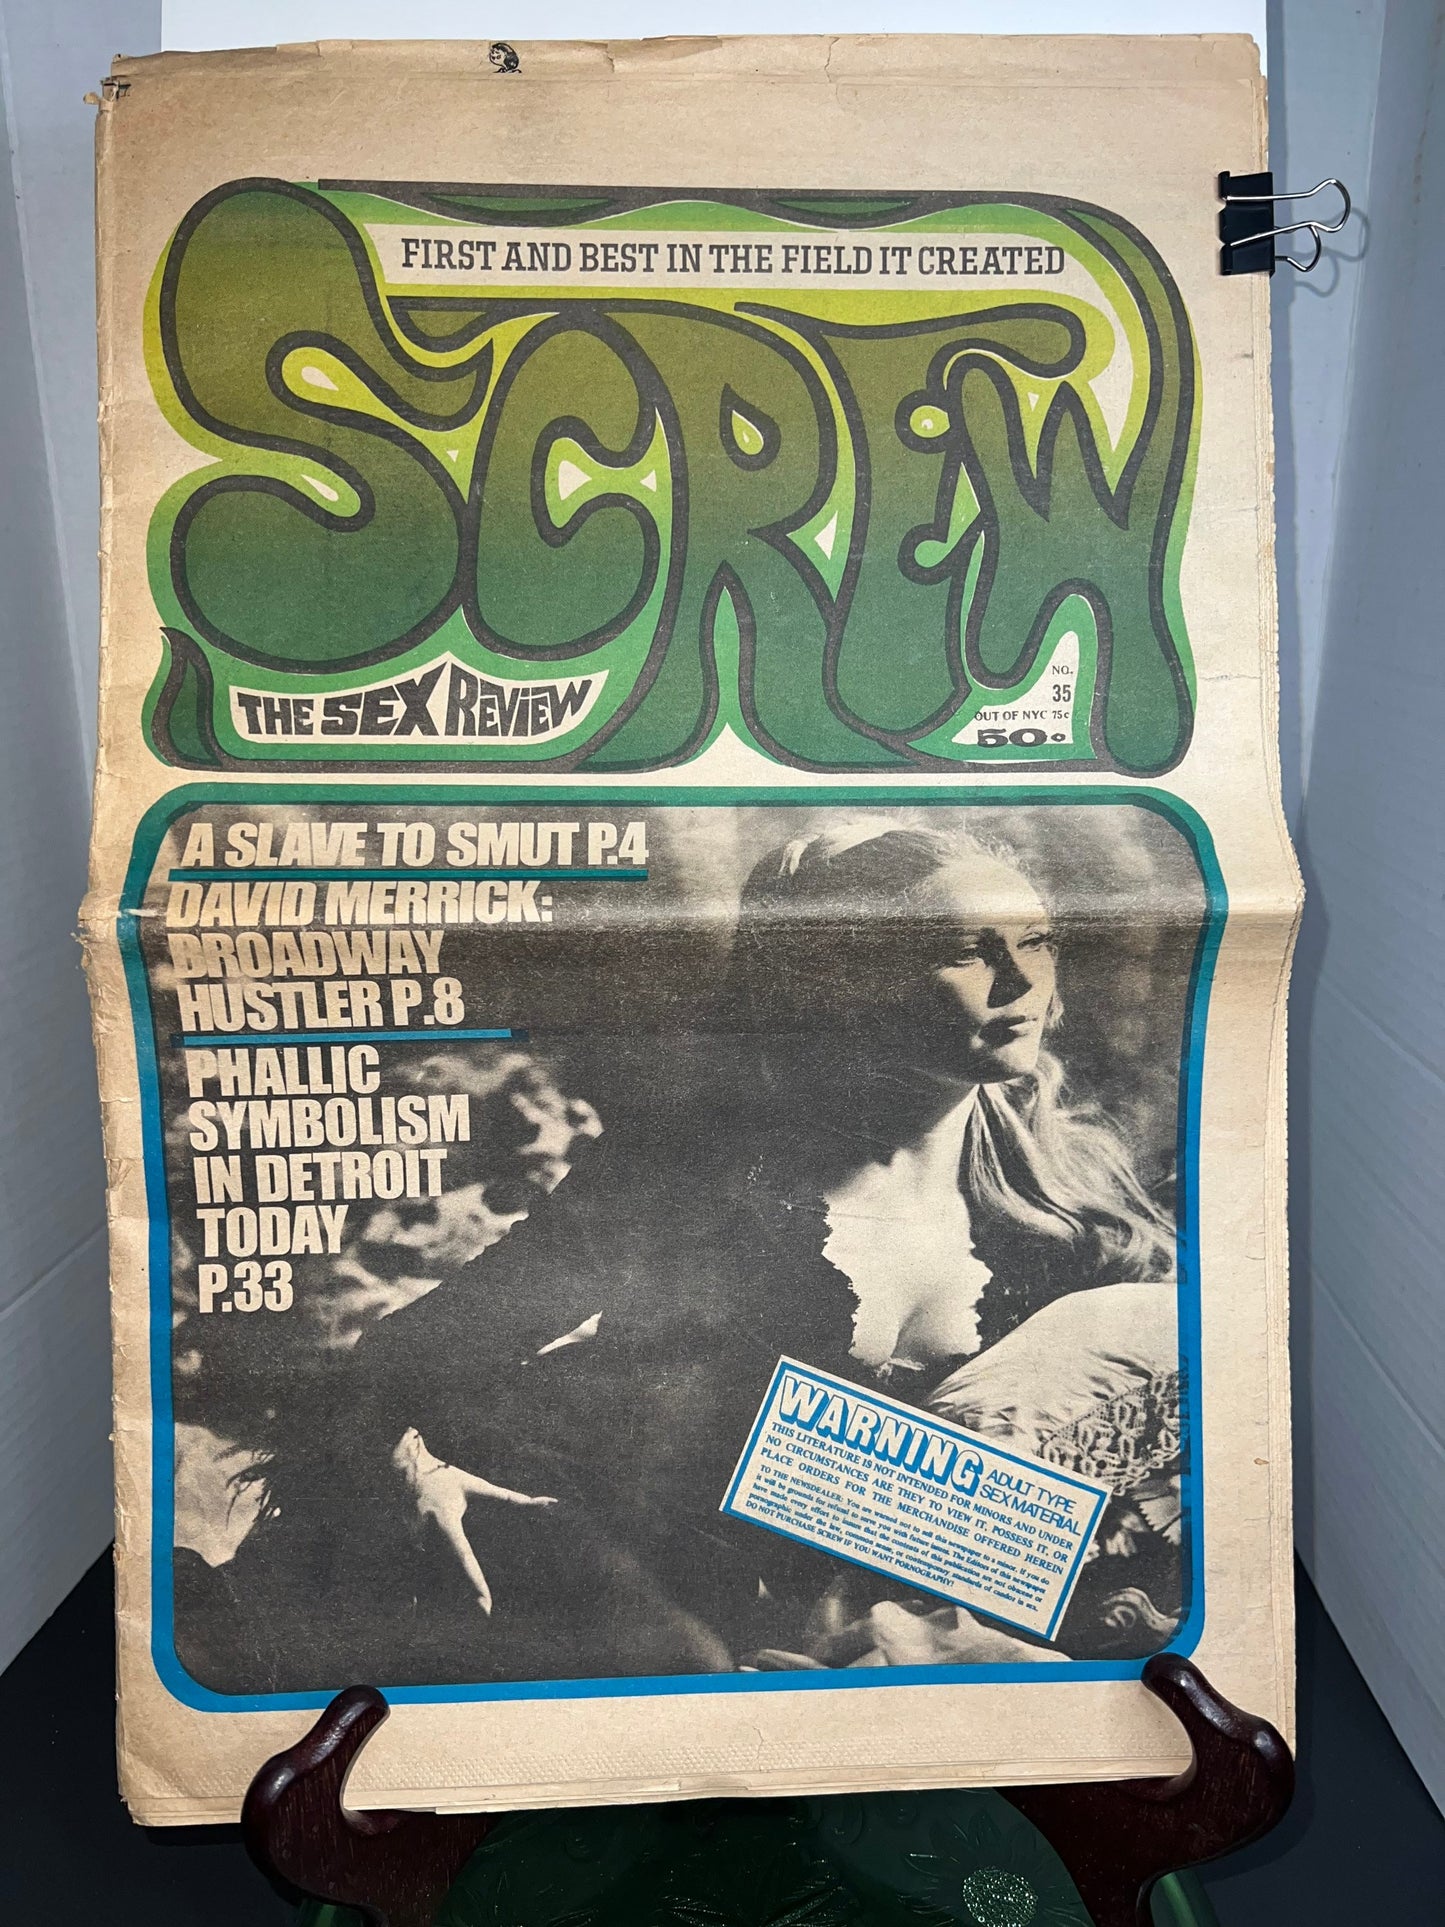 Vintage screw magazine adult retro smut 1969 risqué hippie